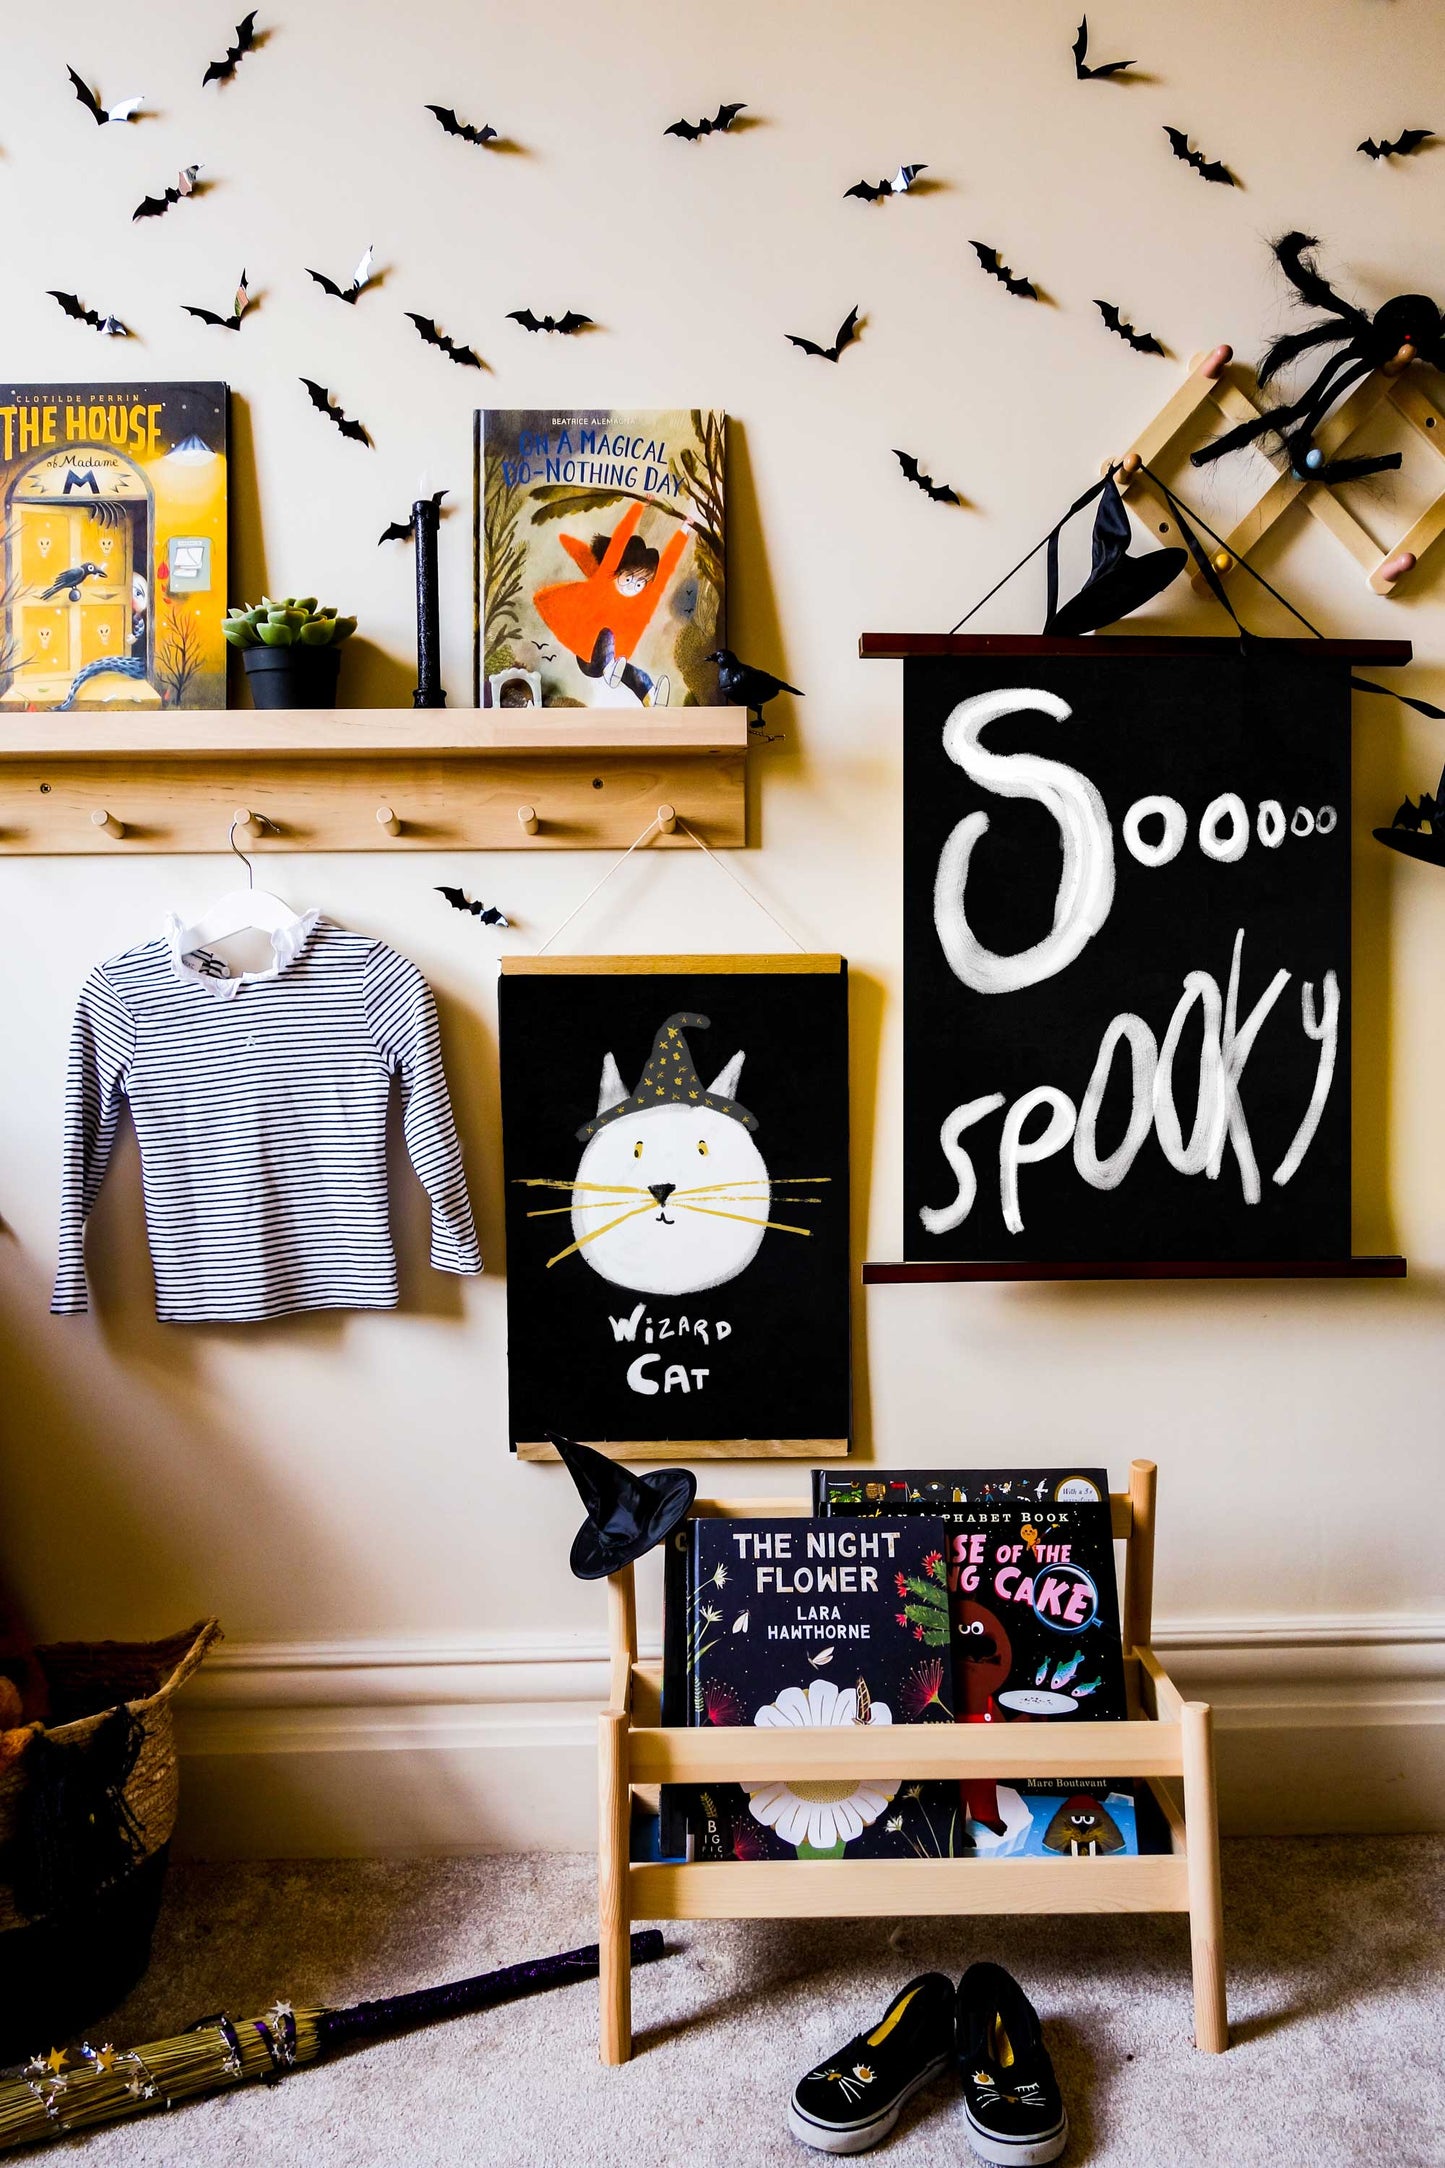 Soooo Spooky - Halloween Special Fine Art Print with Hanger